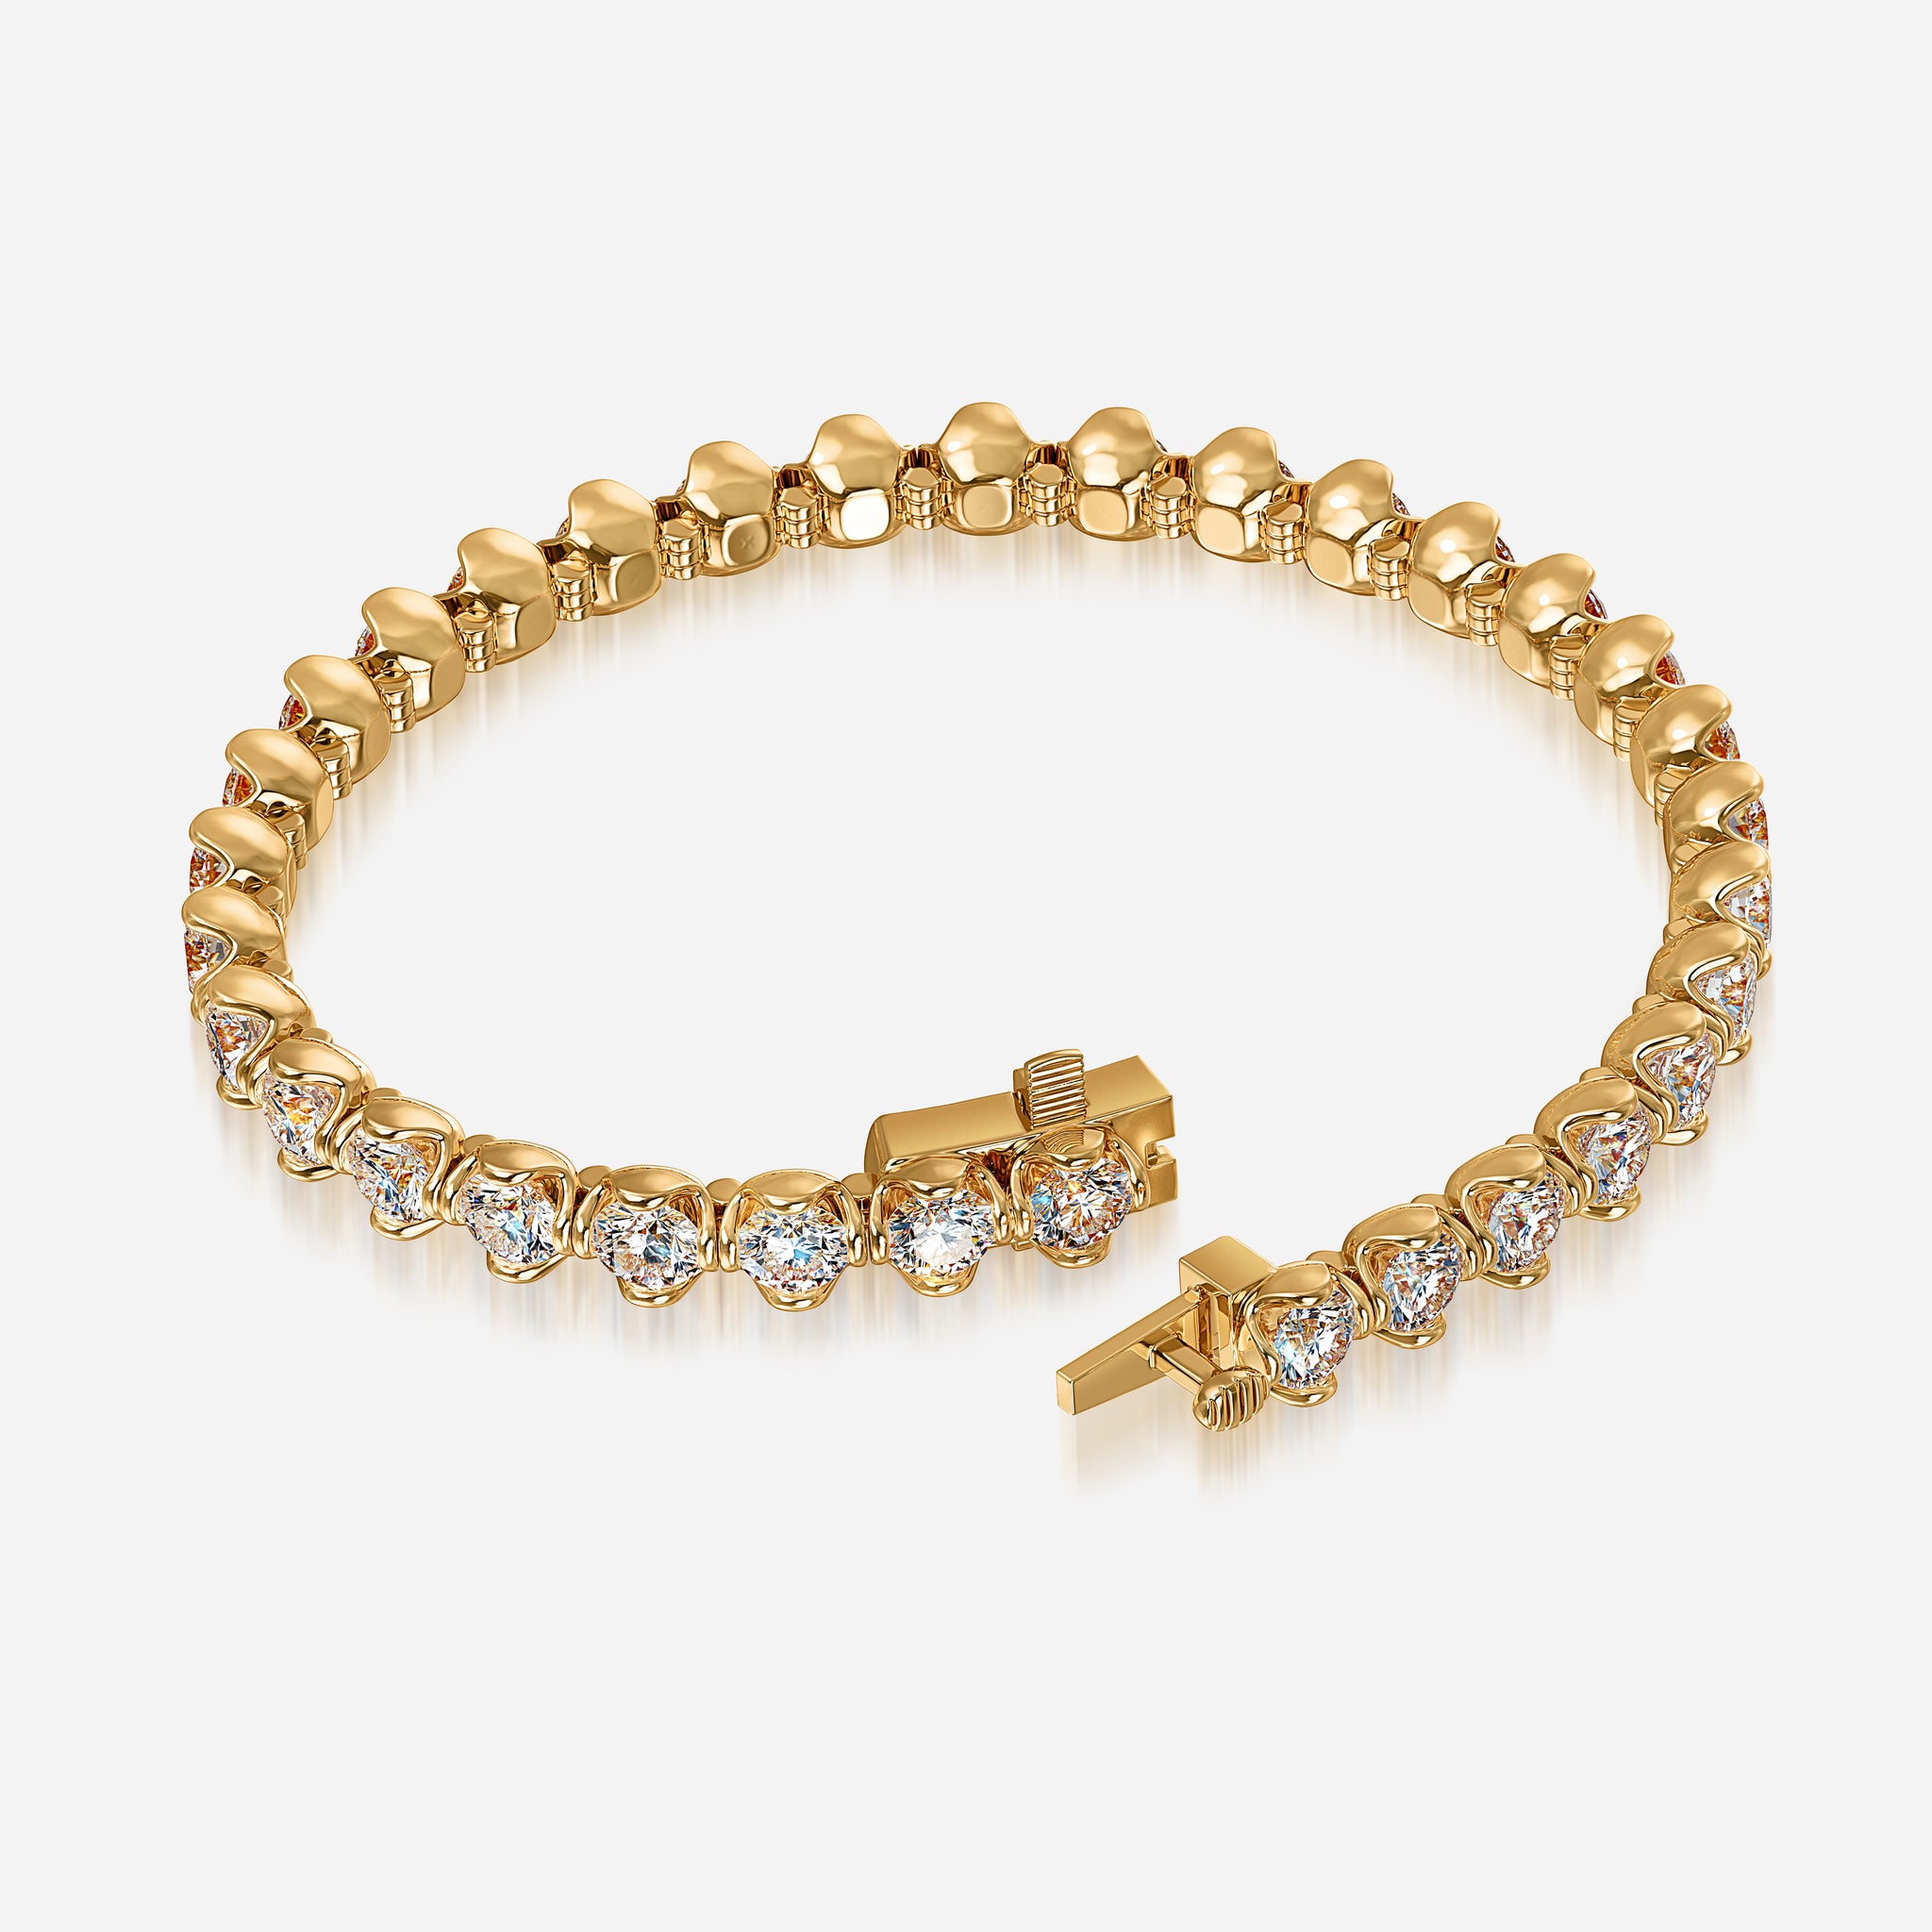 25 ct. t.w. Diamond Heart Lock Charm Toggle Bracelet in 18kt Gold